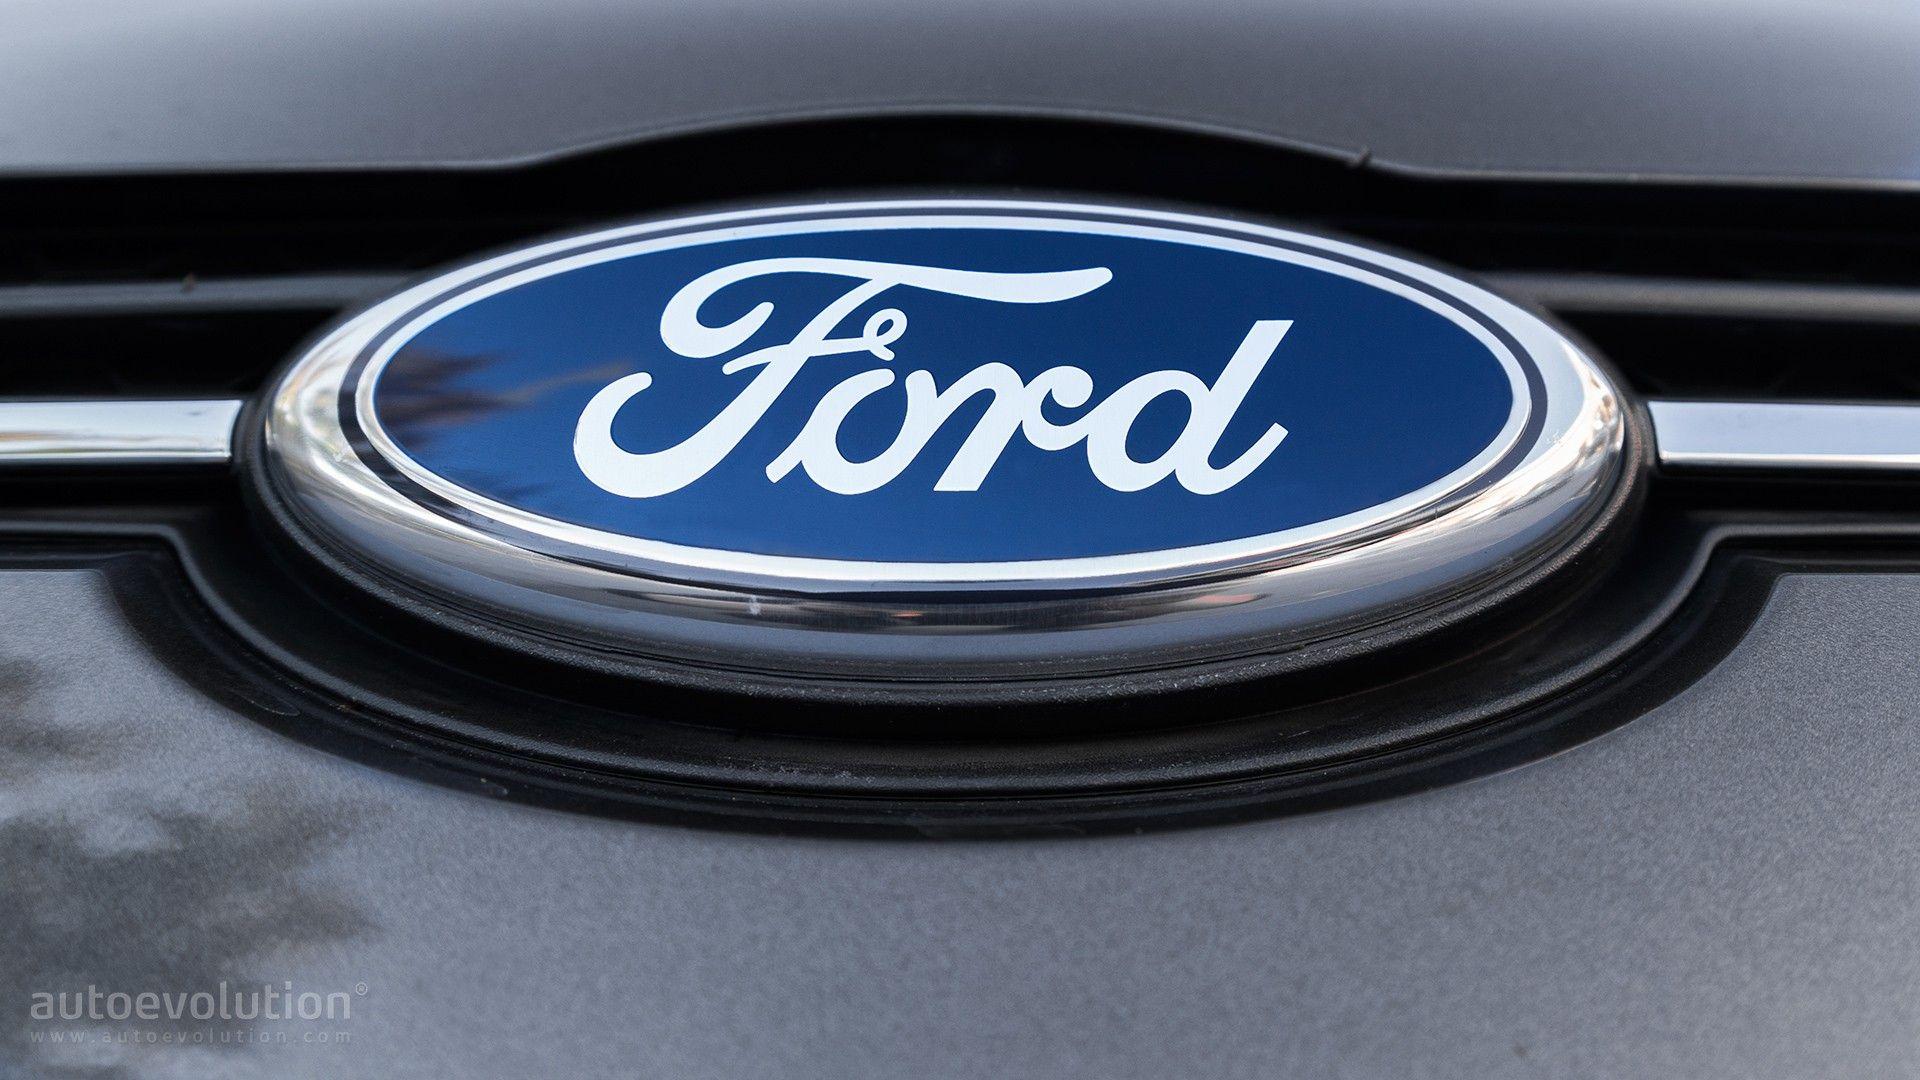 Ford EcoSport Logo - 2016 Ford EcoSport 1.0 Ecoboost Review - autoevolution